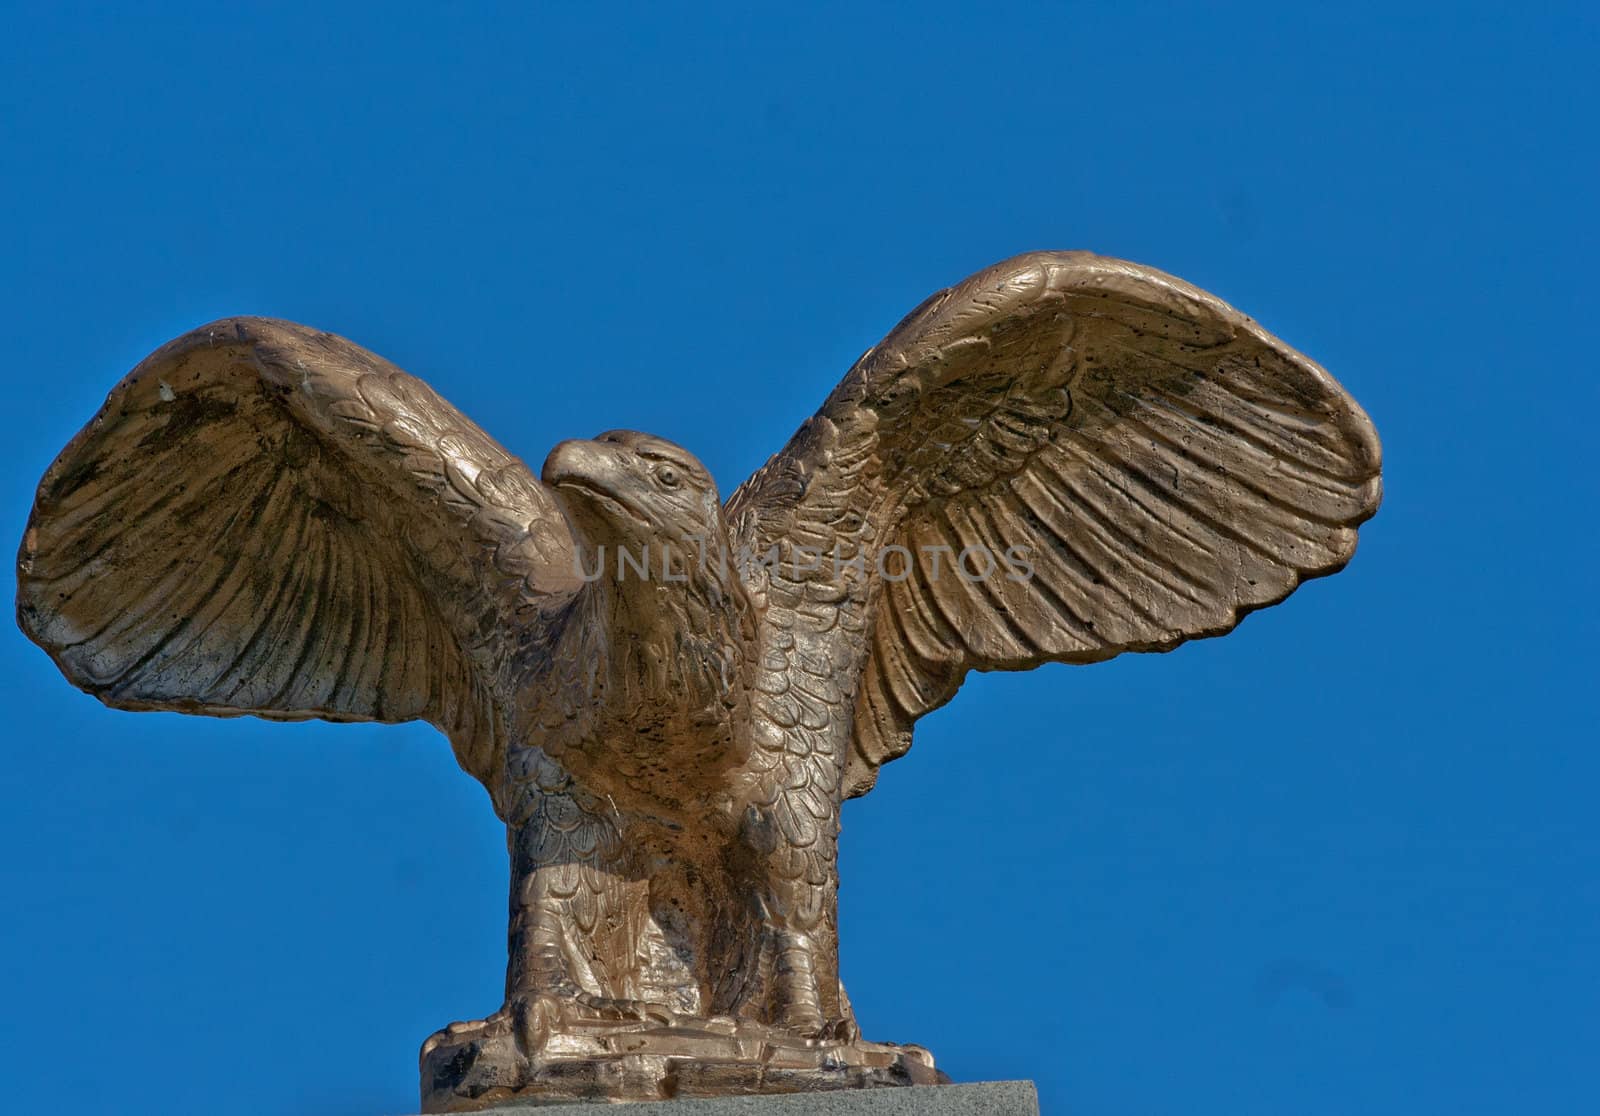 Eagle in flight as a bronze statute against a blue sky.